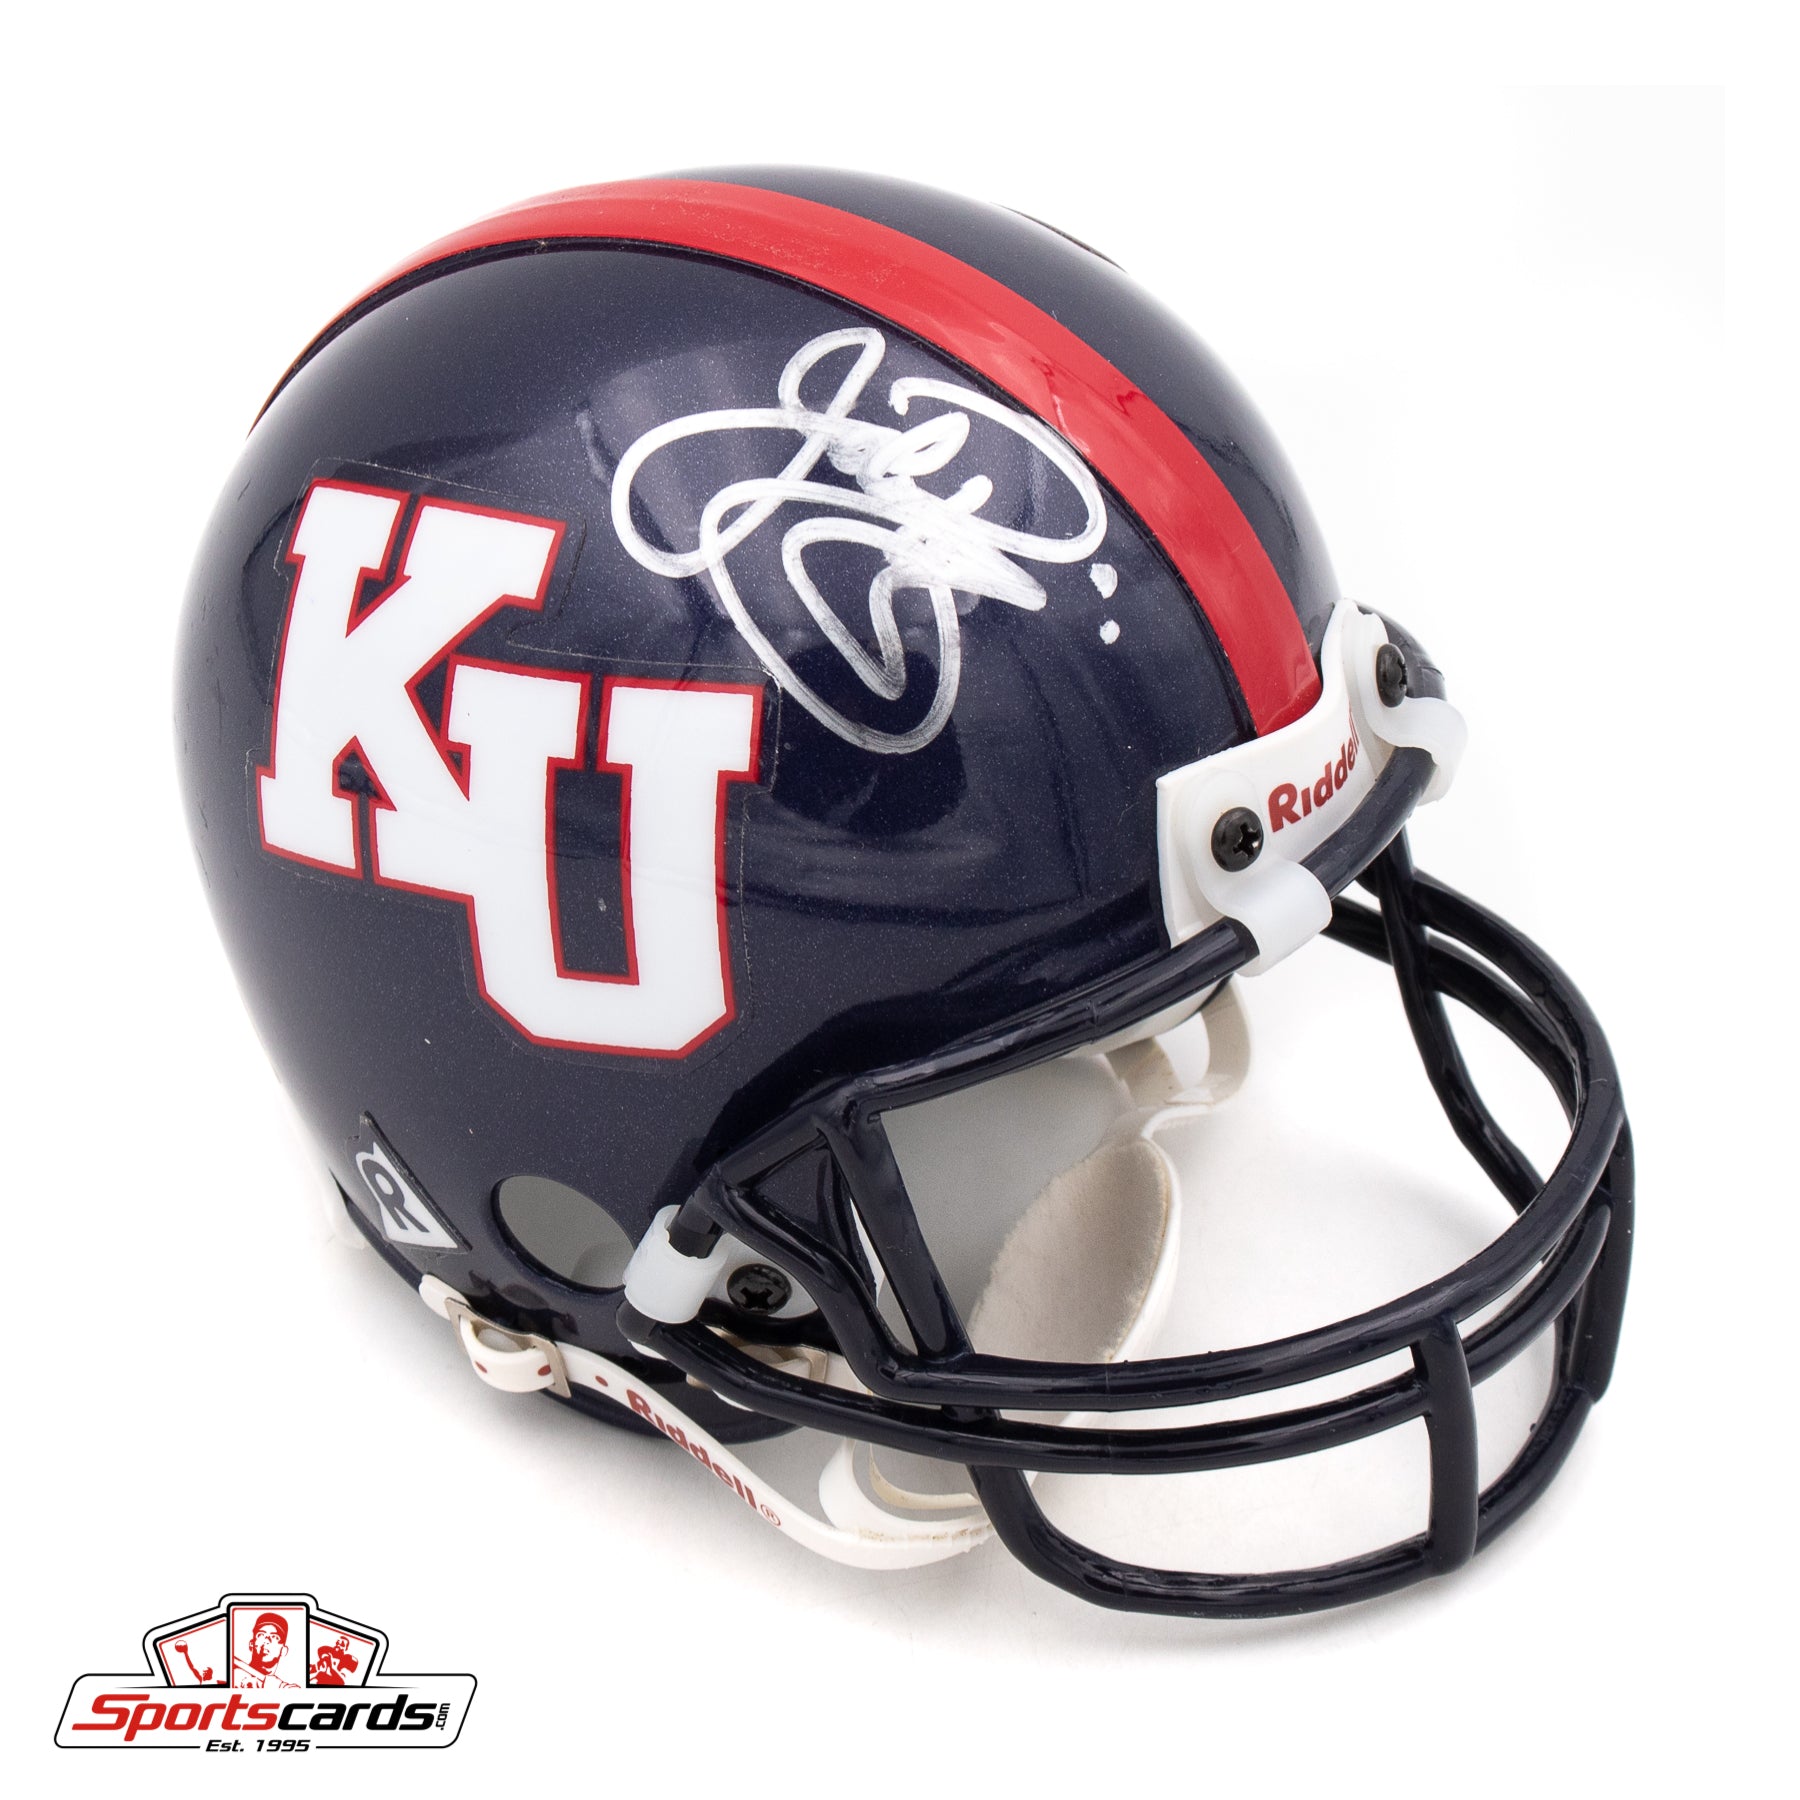 John Riggins Signed Autographed University of Kansas Mini Helmet PSA/DNA COA